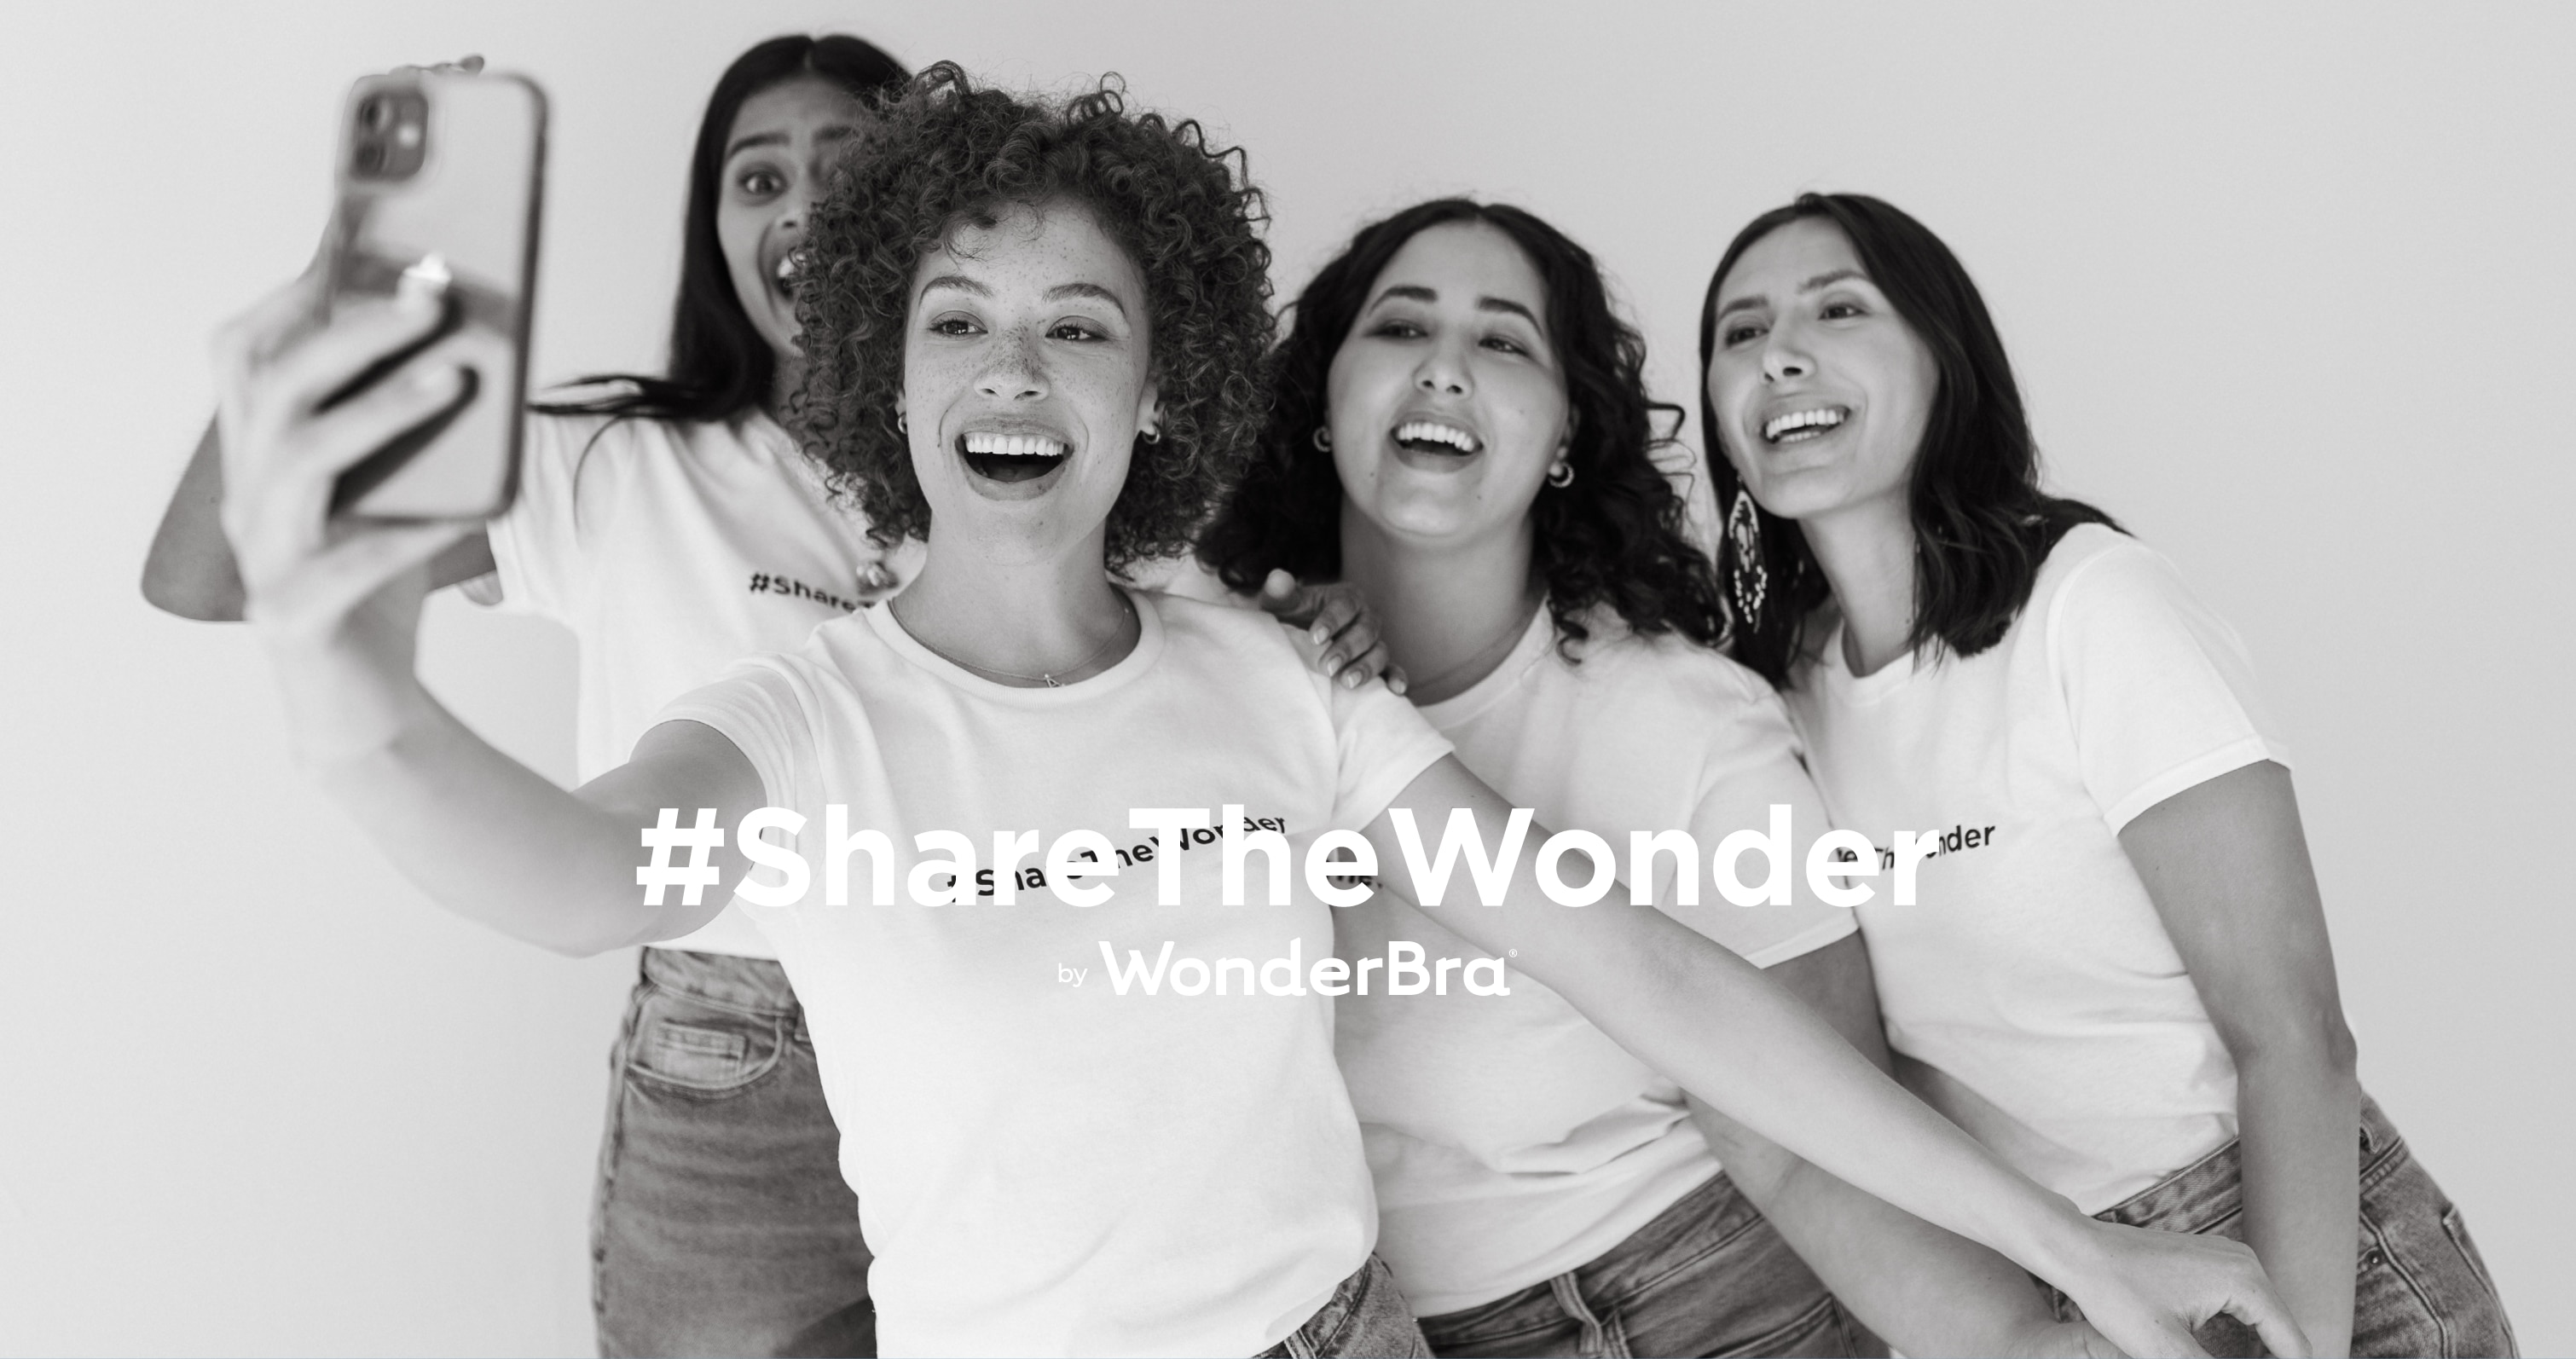 Share the Wonder. Wonderbra